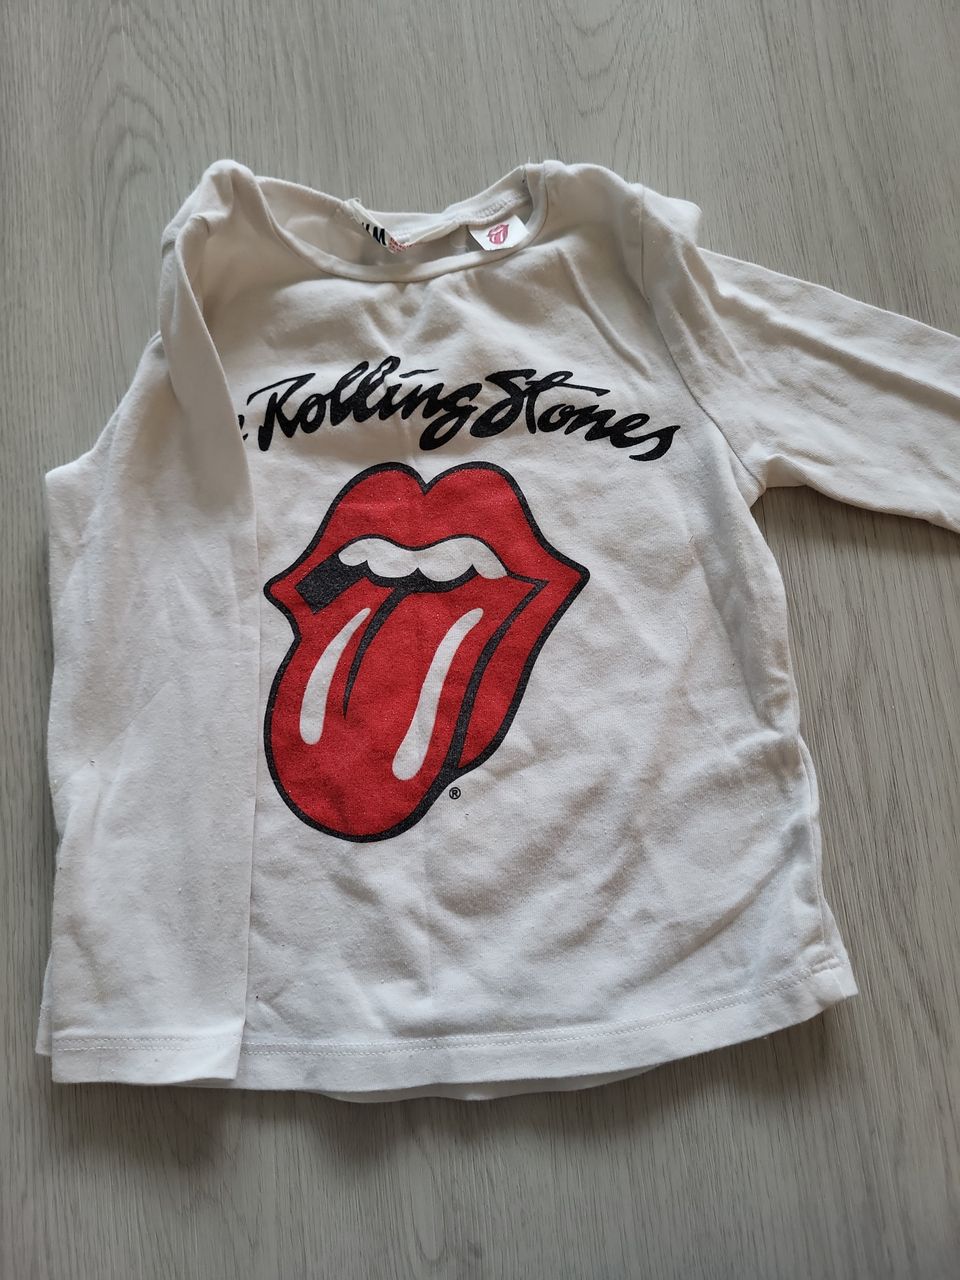 H&M Rolling Stones paita koko 92